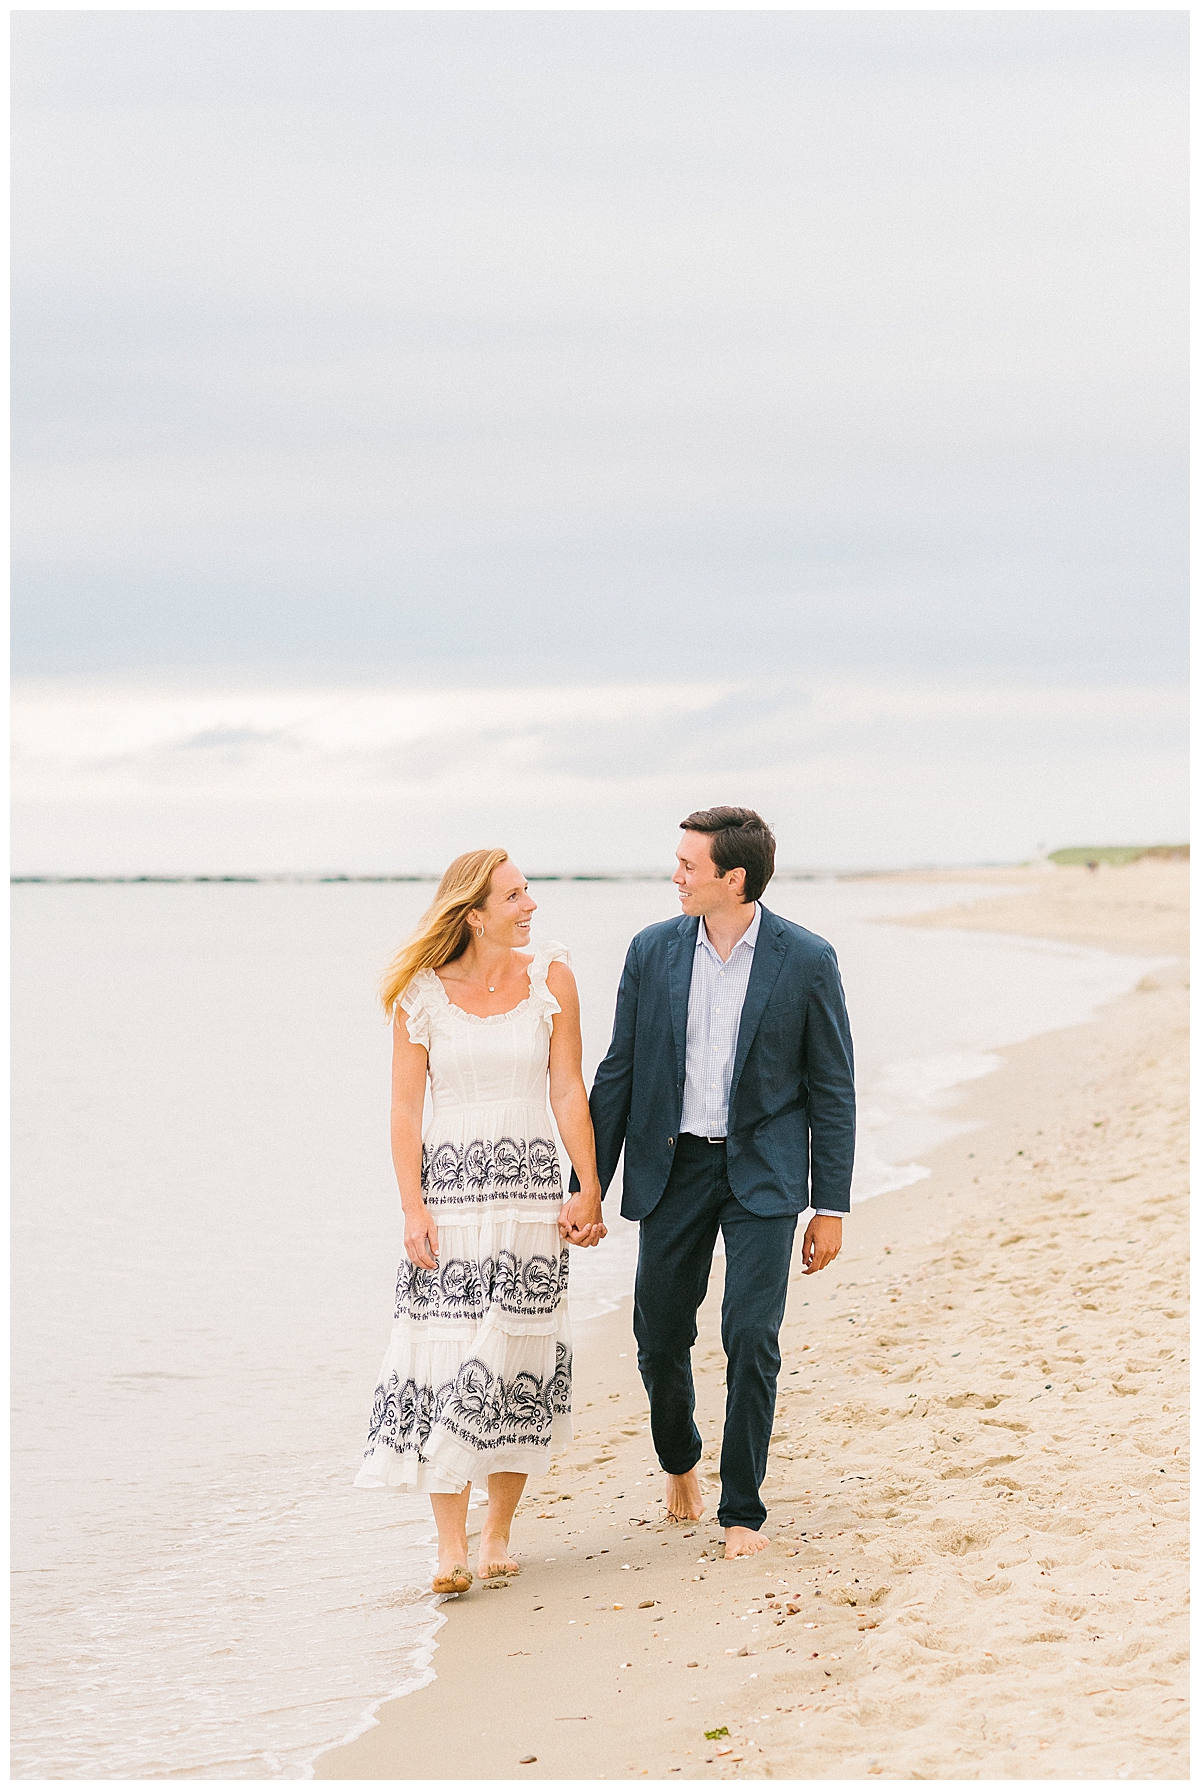 Eliza and Jack's Romantic Nantucket Beach Engagement